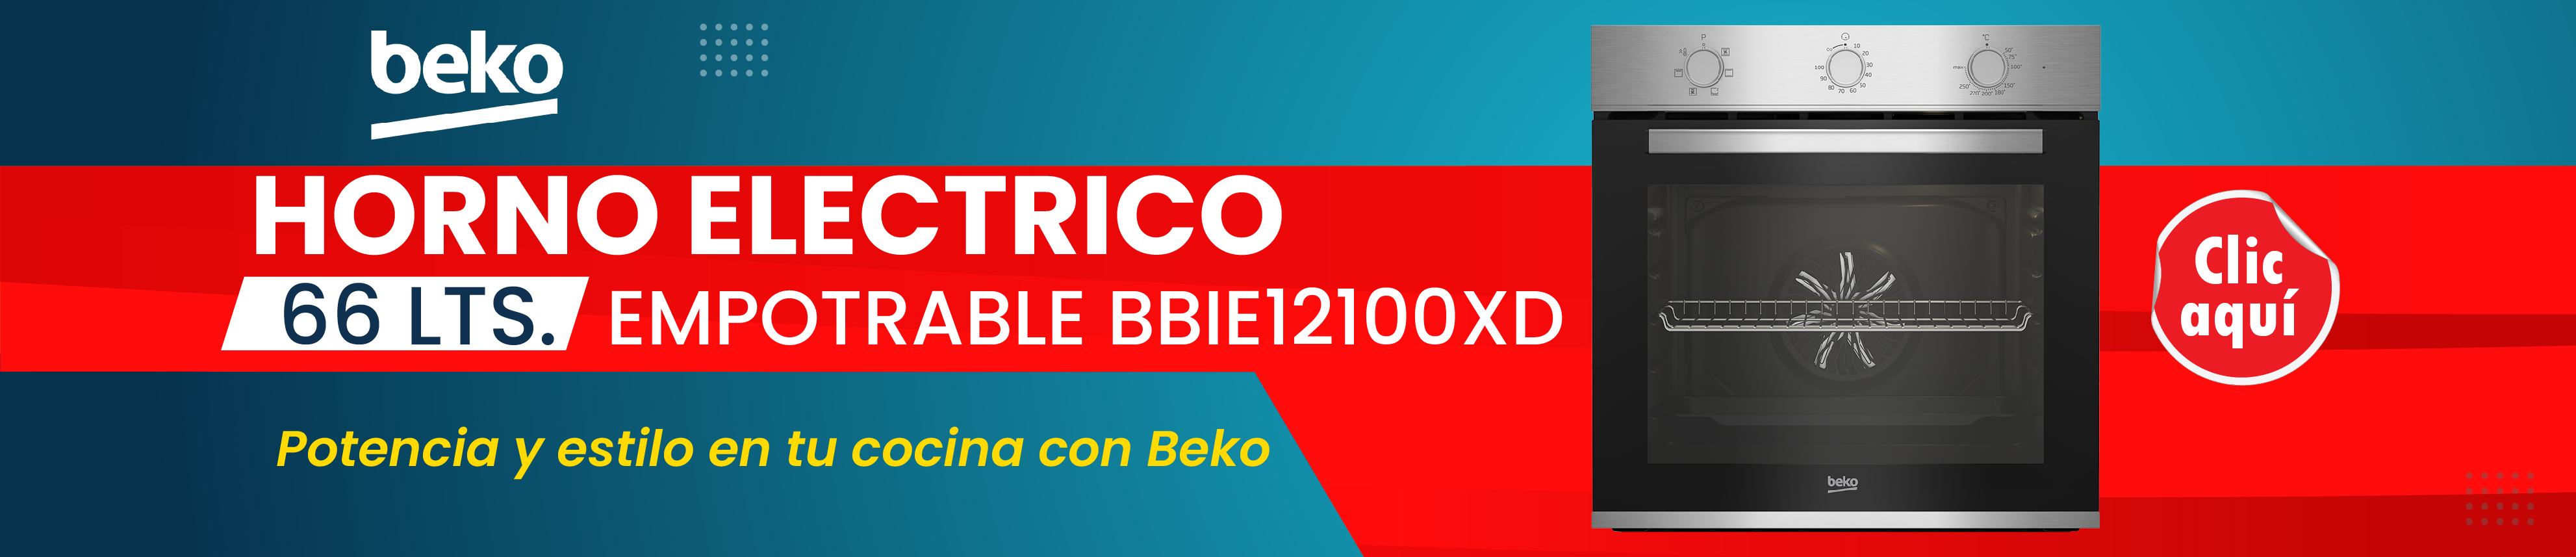 Horno Electrico Beko Empotrable 66 Lts. BBIE12100XD